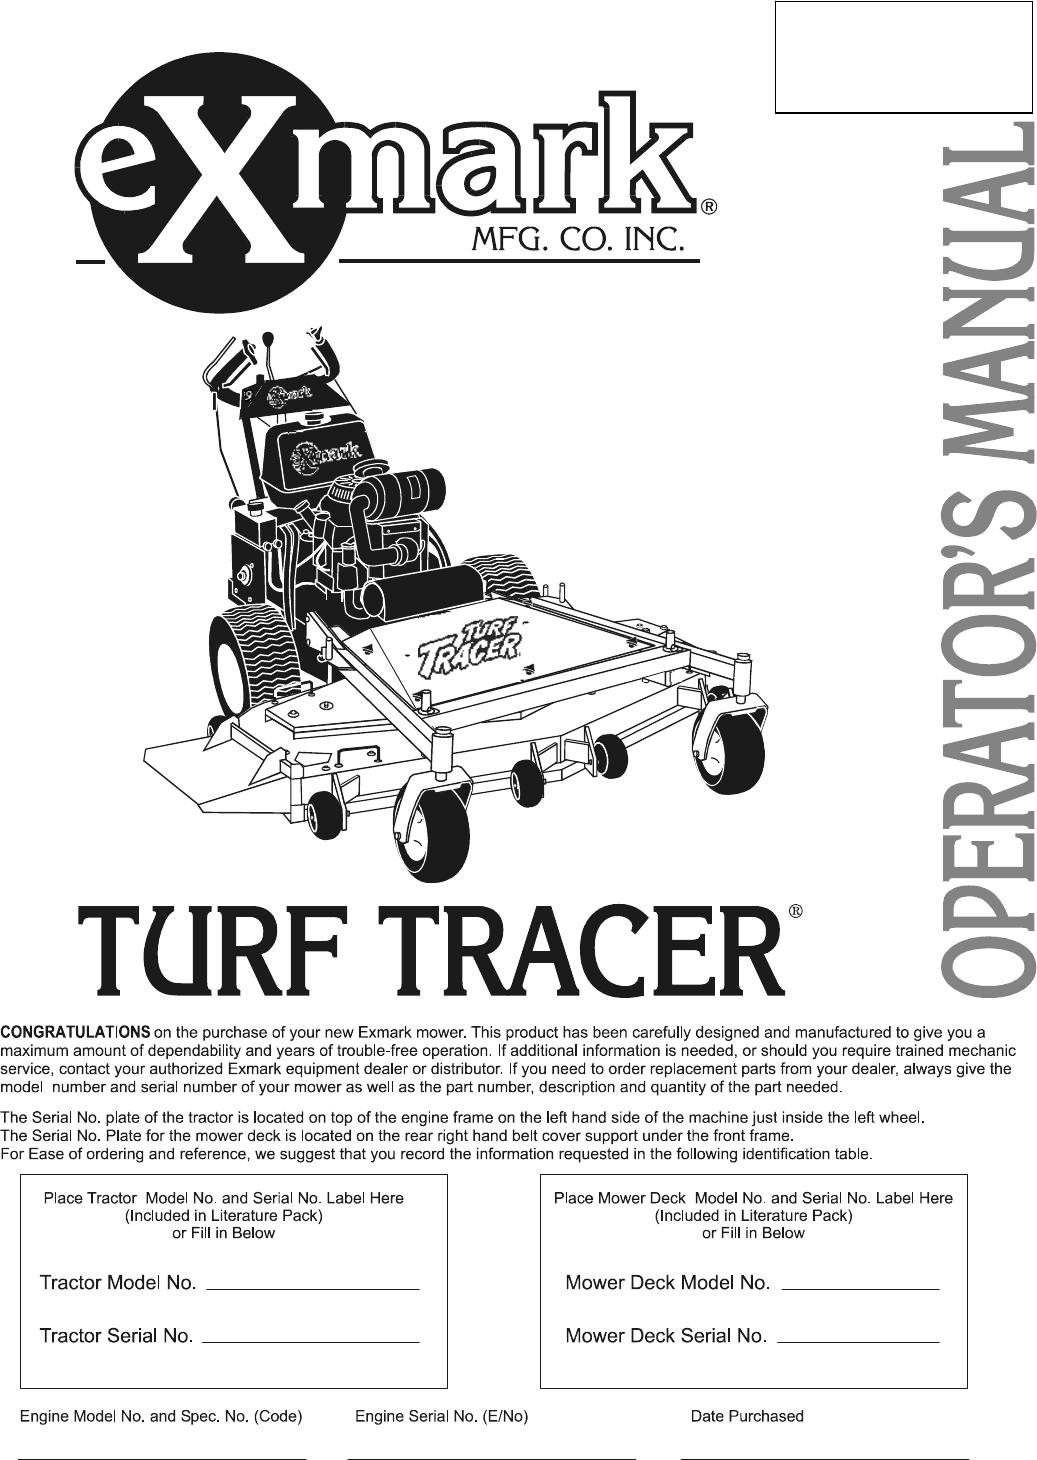 Exmark Lawn Mower Fmd524 User Guide